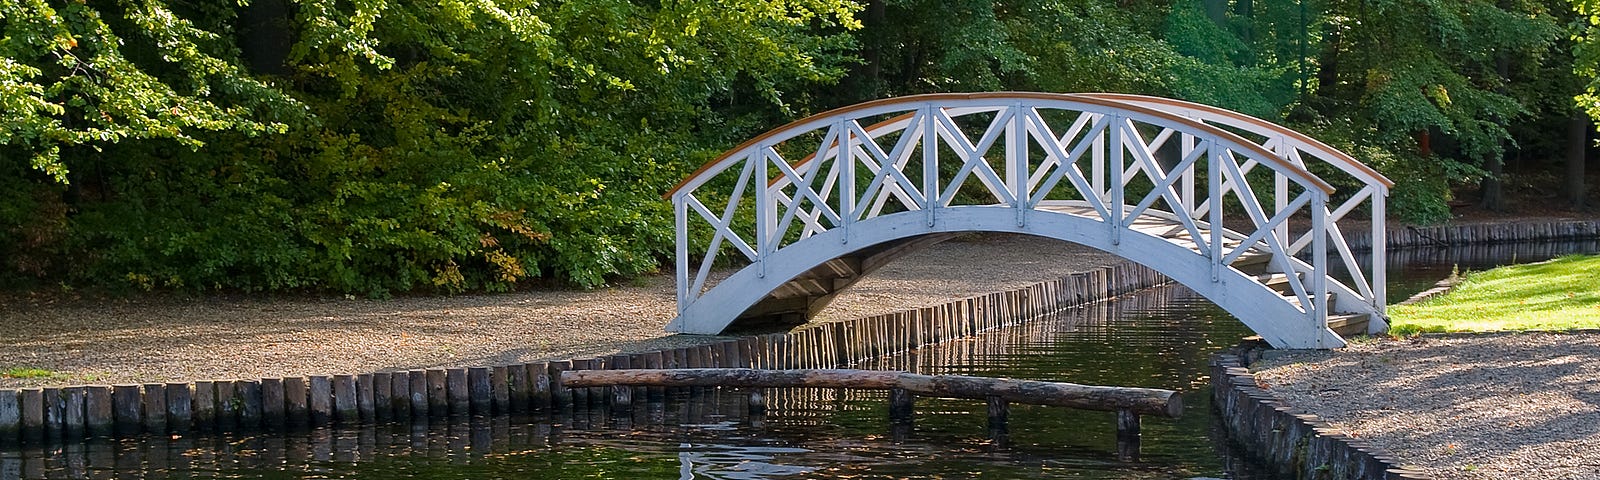 a small footbridge over a stream in a park